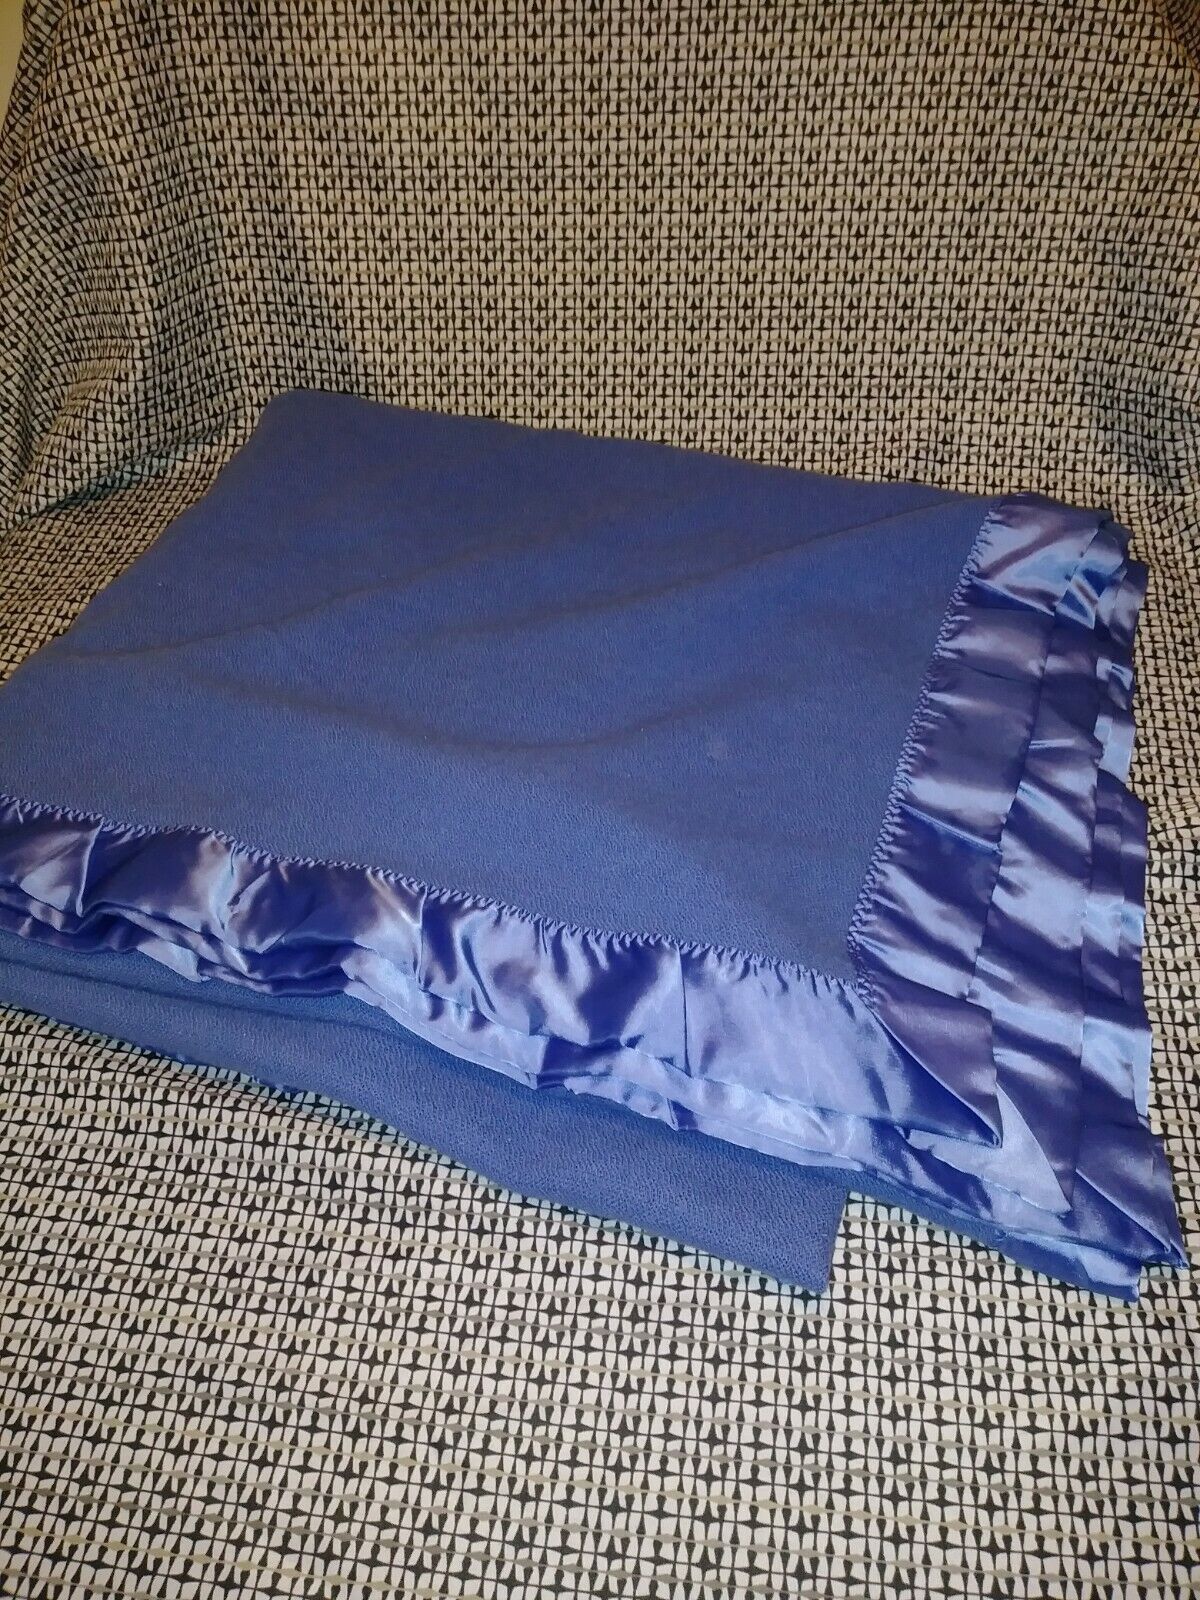 Faribault Woolen Mill Co. King 100% Pure Wool Blue Blanket Satin Trim 108x90